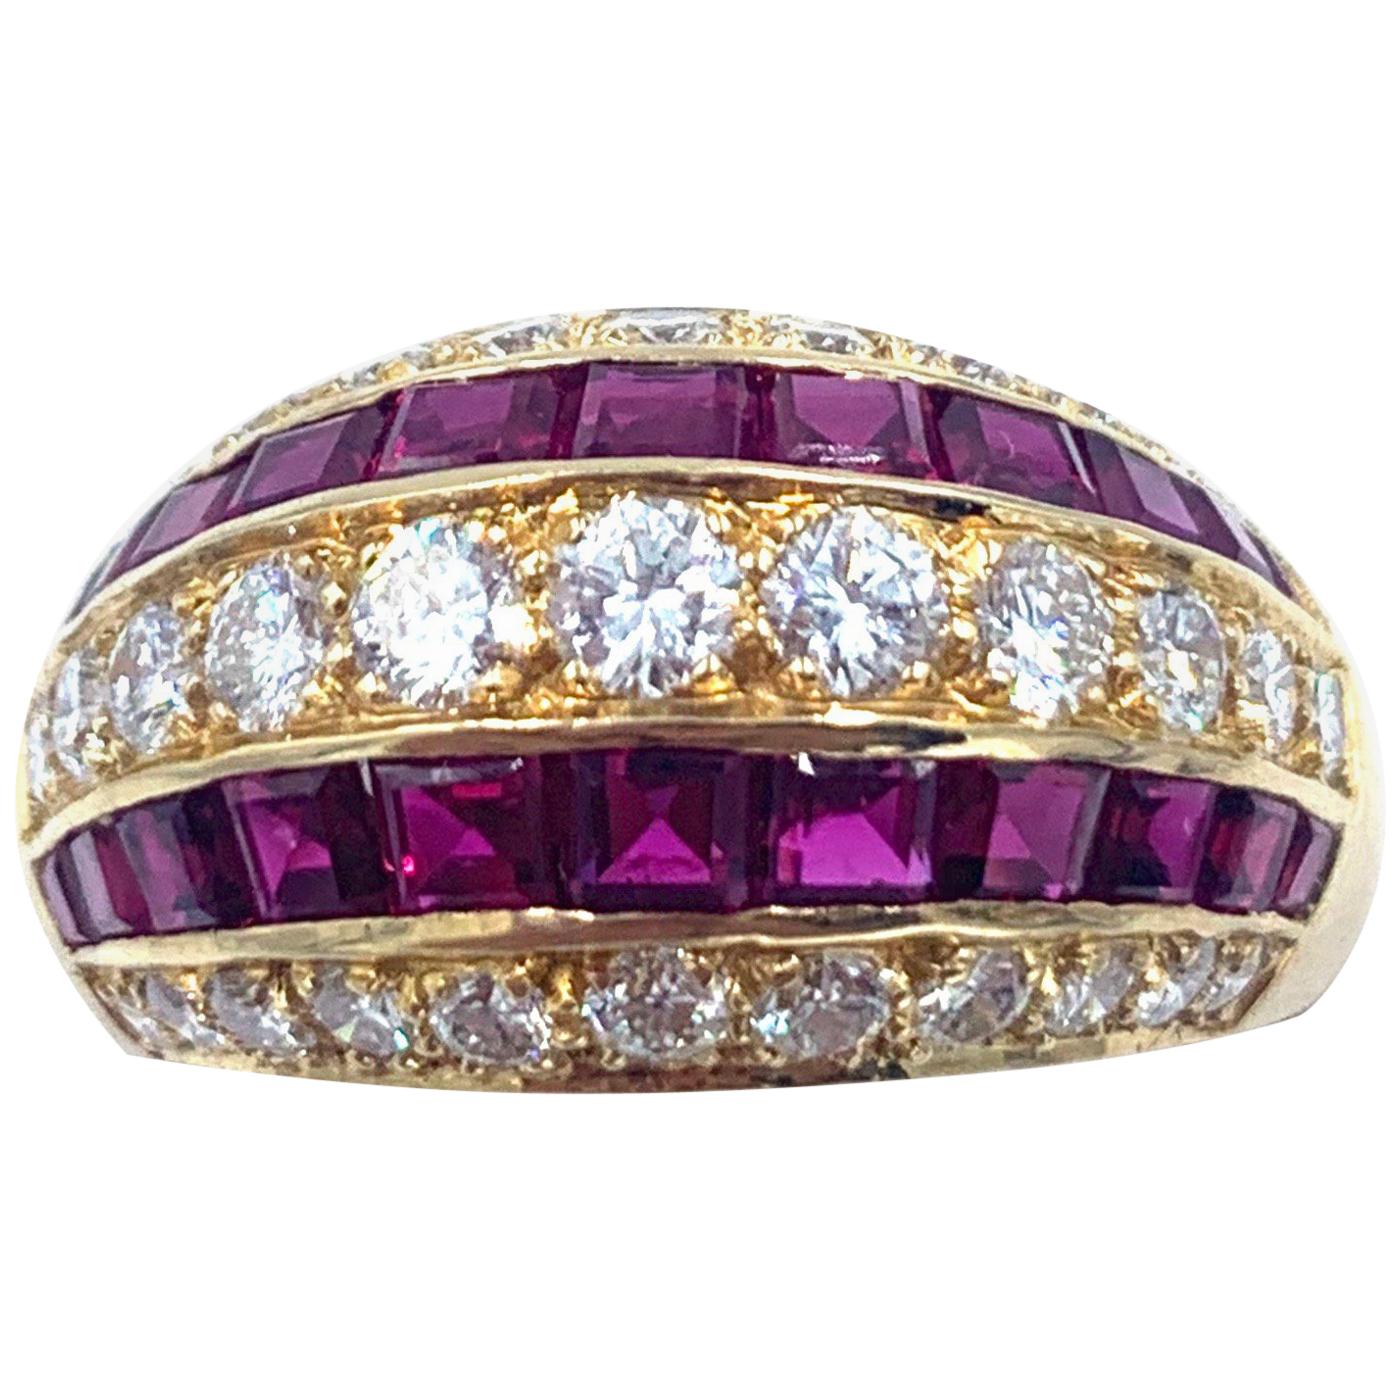 Stunning Oscar Heyman Ruby and Diamond 18 Karat Yellow Gold Dome Ring